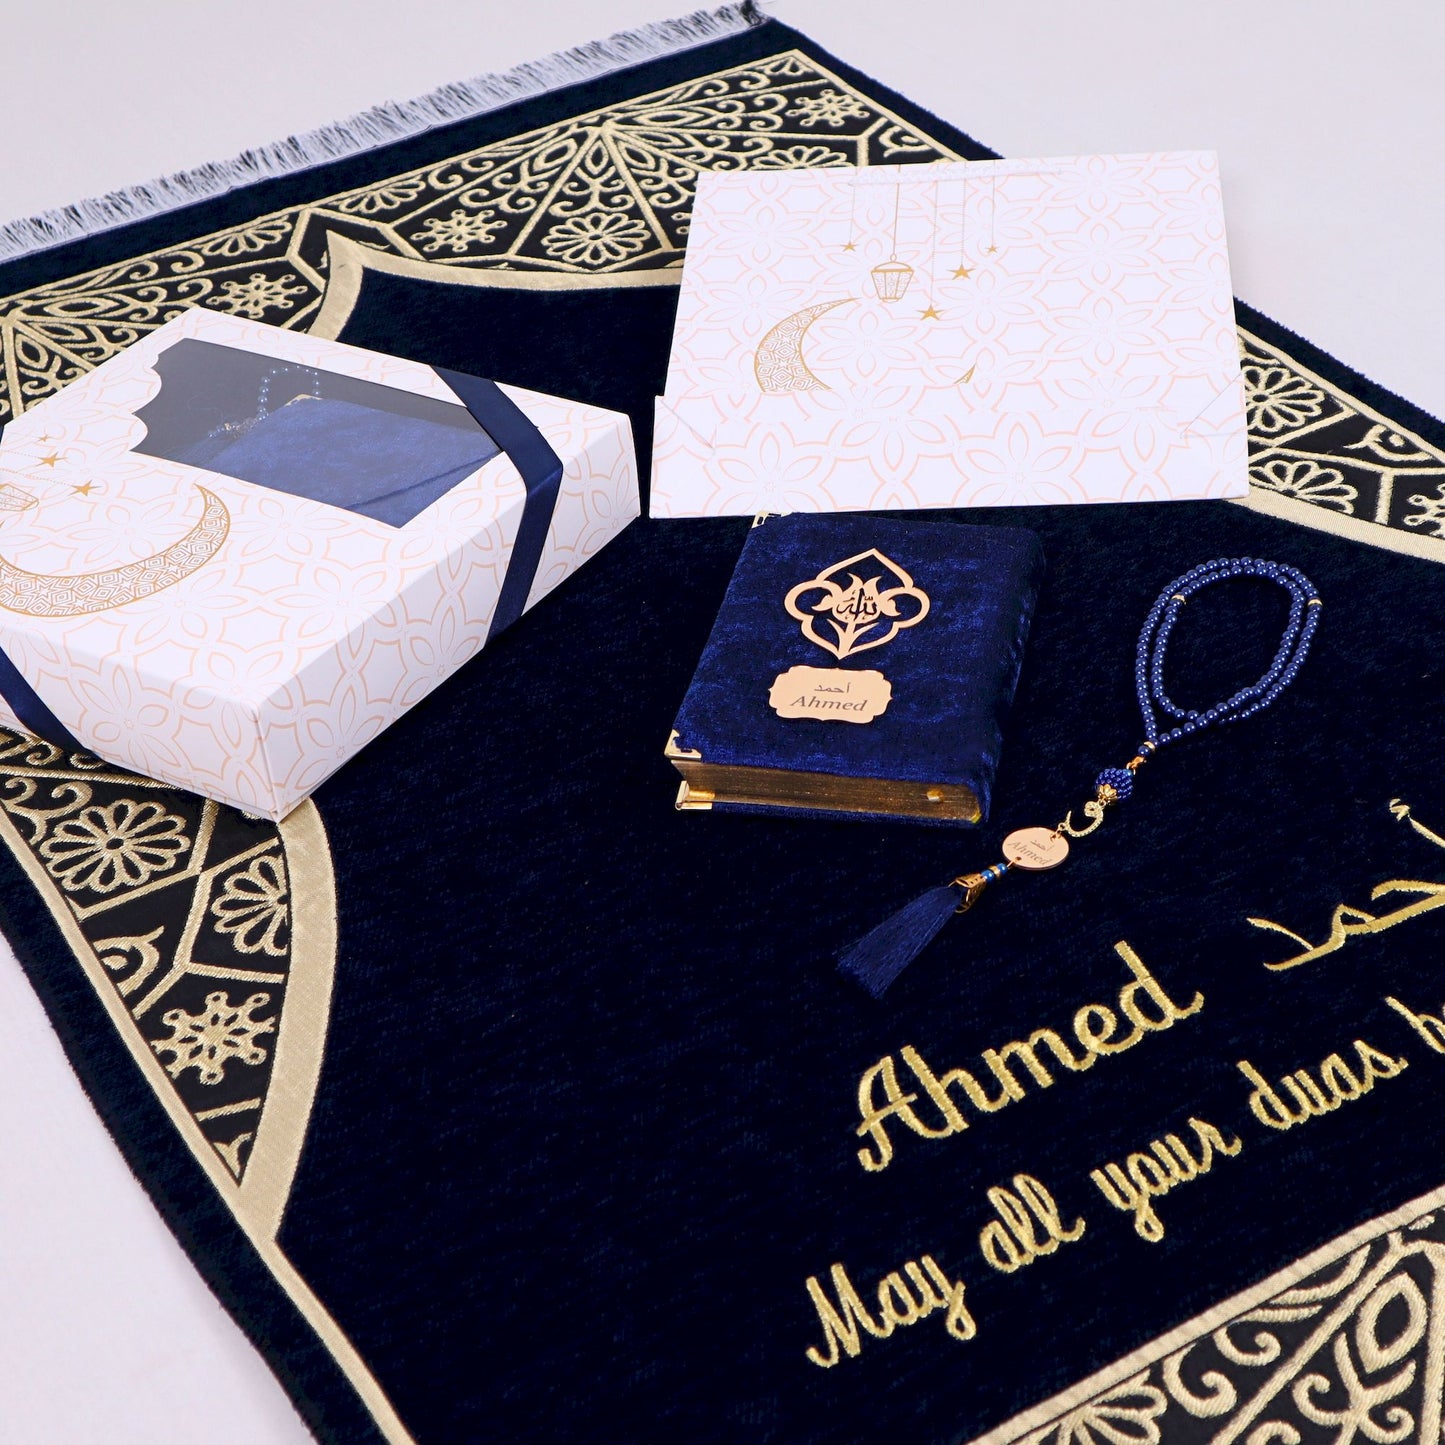 Personalized Taj Mahal Prayer Mat Quran Tasbih Islamic Muslim Gift Set